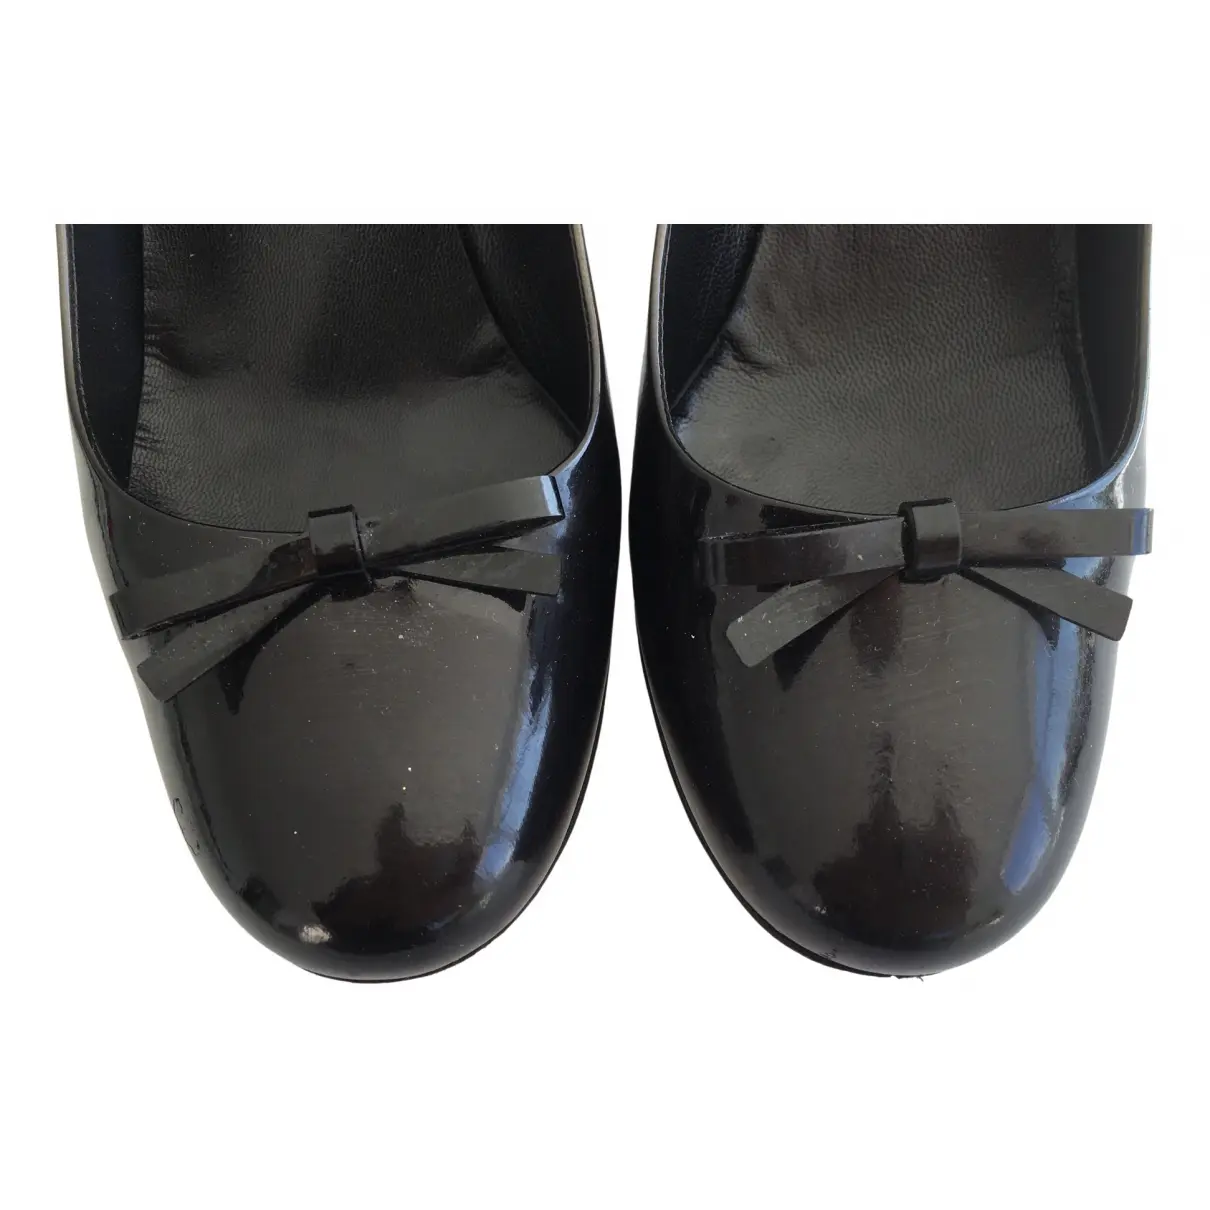 Buy Prada Patent leather heels online